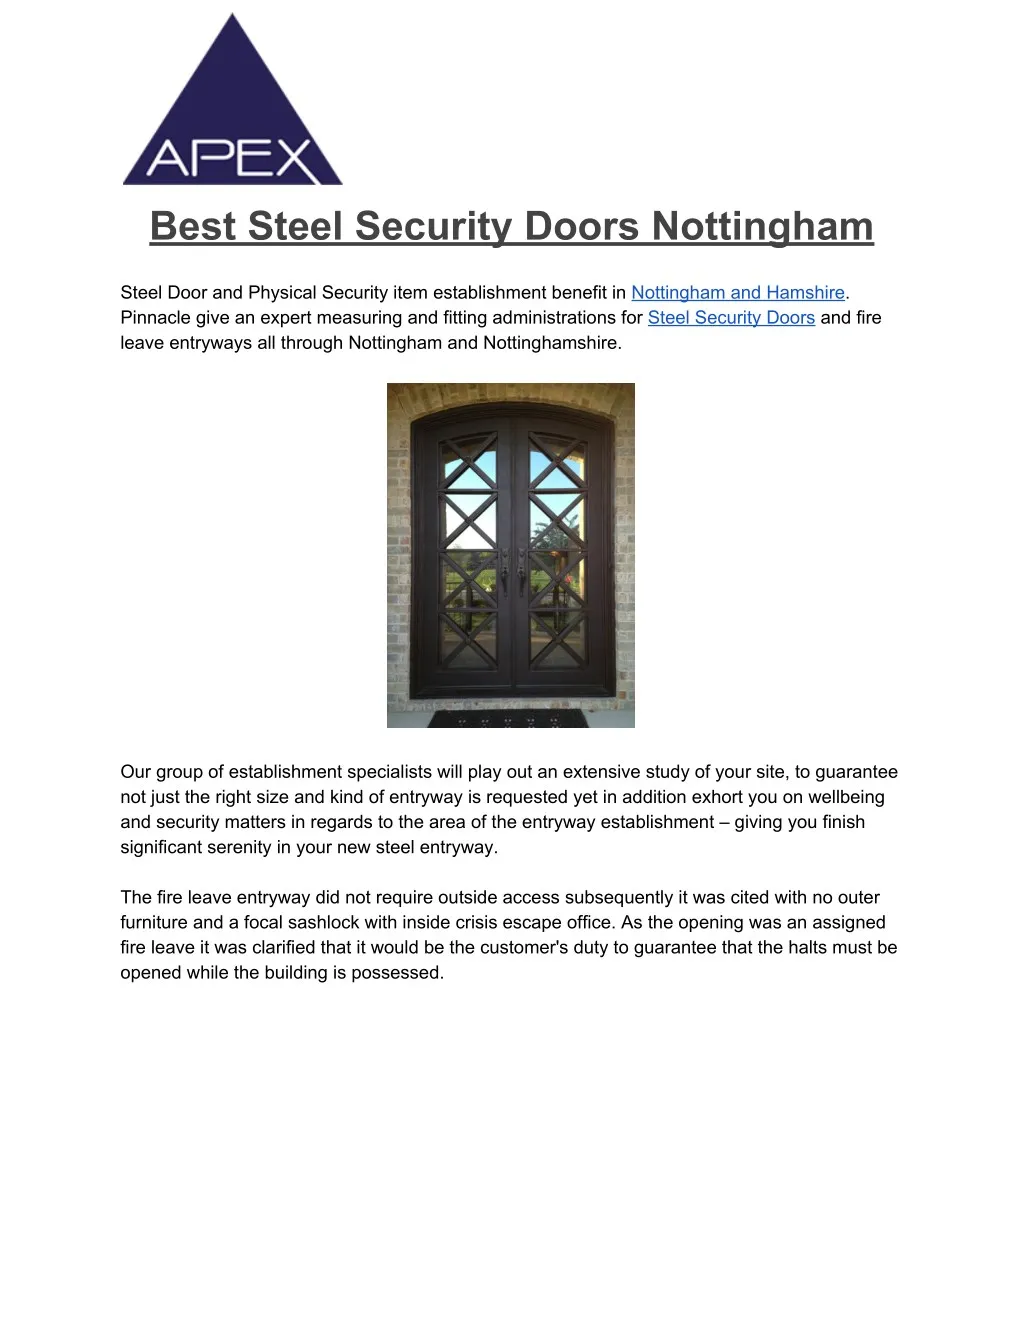 best steel security doors nottingham n.